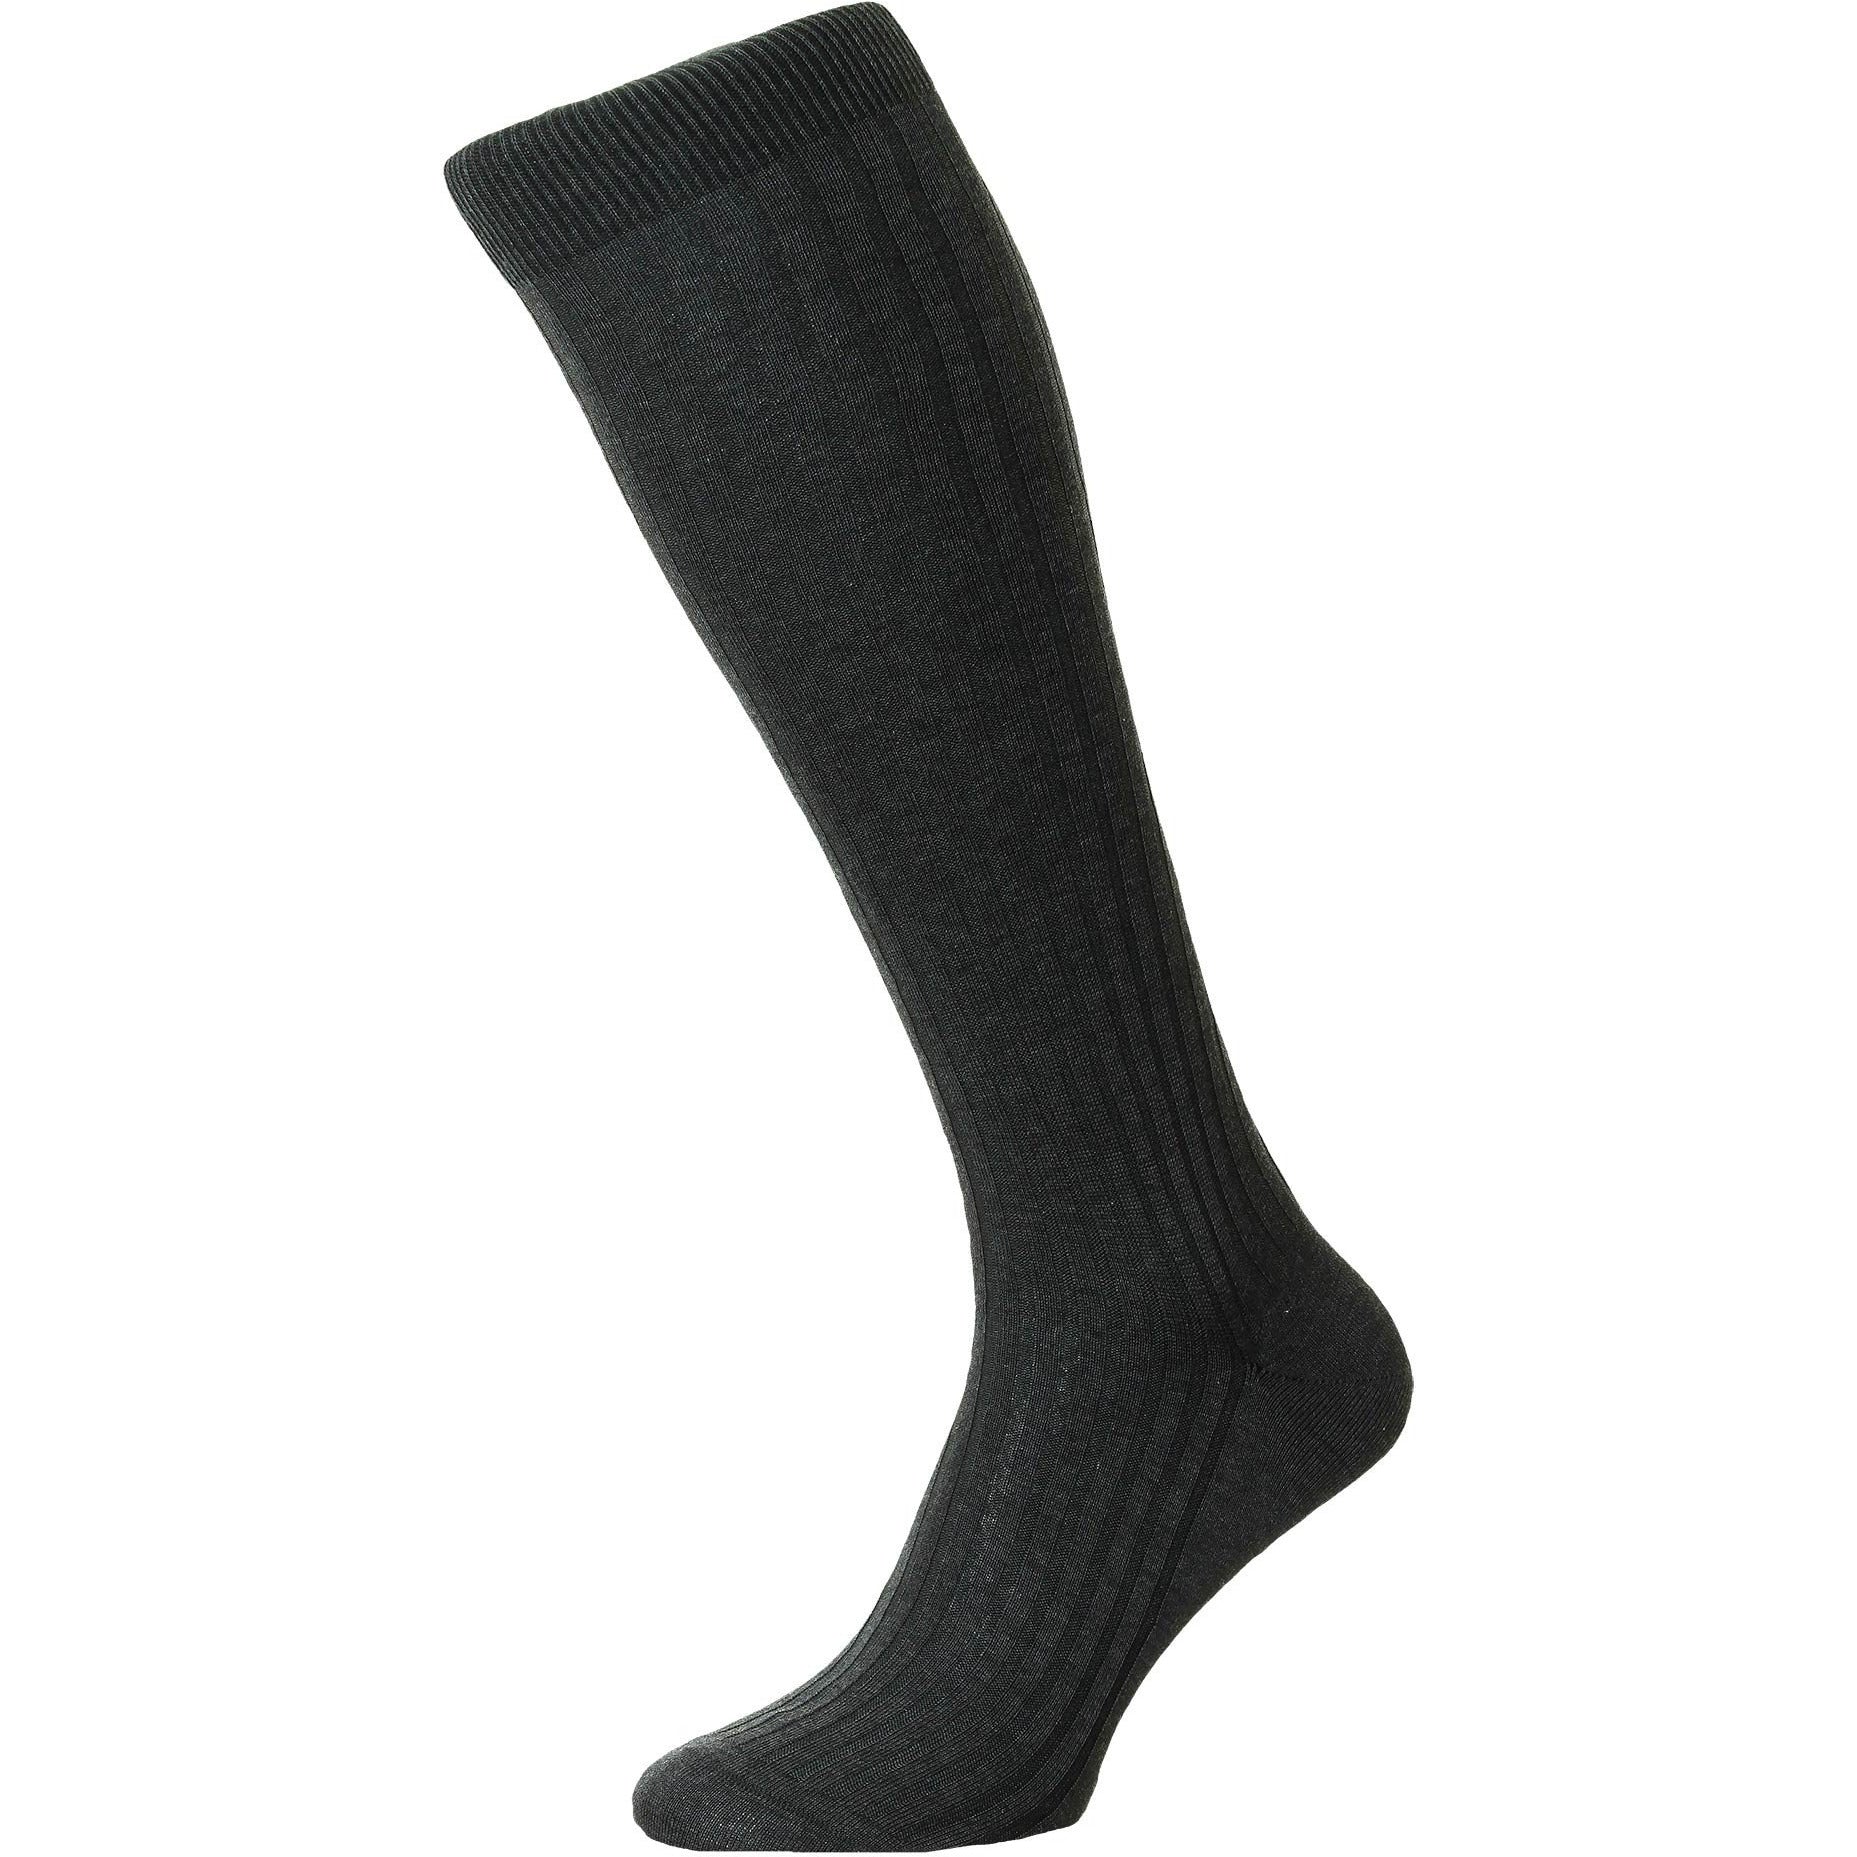 Danvers 5x3 Rib Cotton Lisle Over the Calf Dress Socks